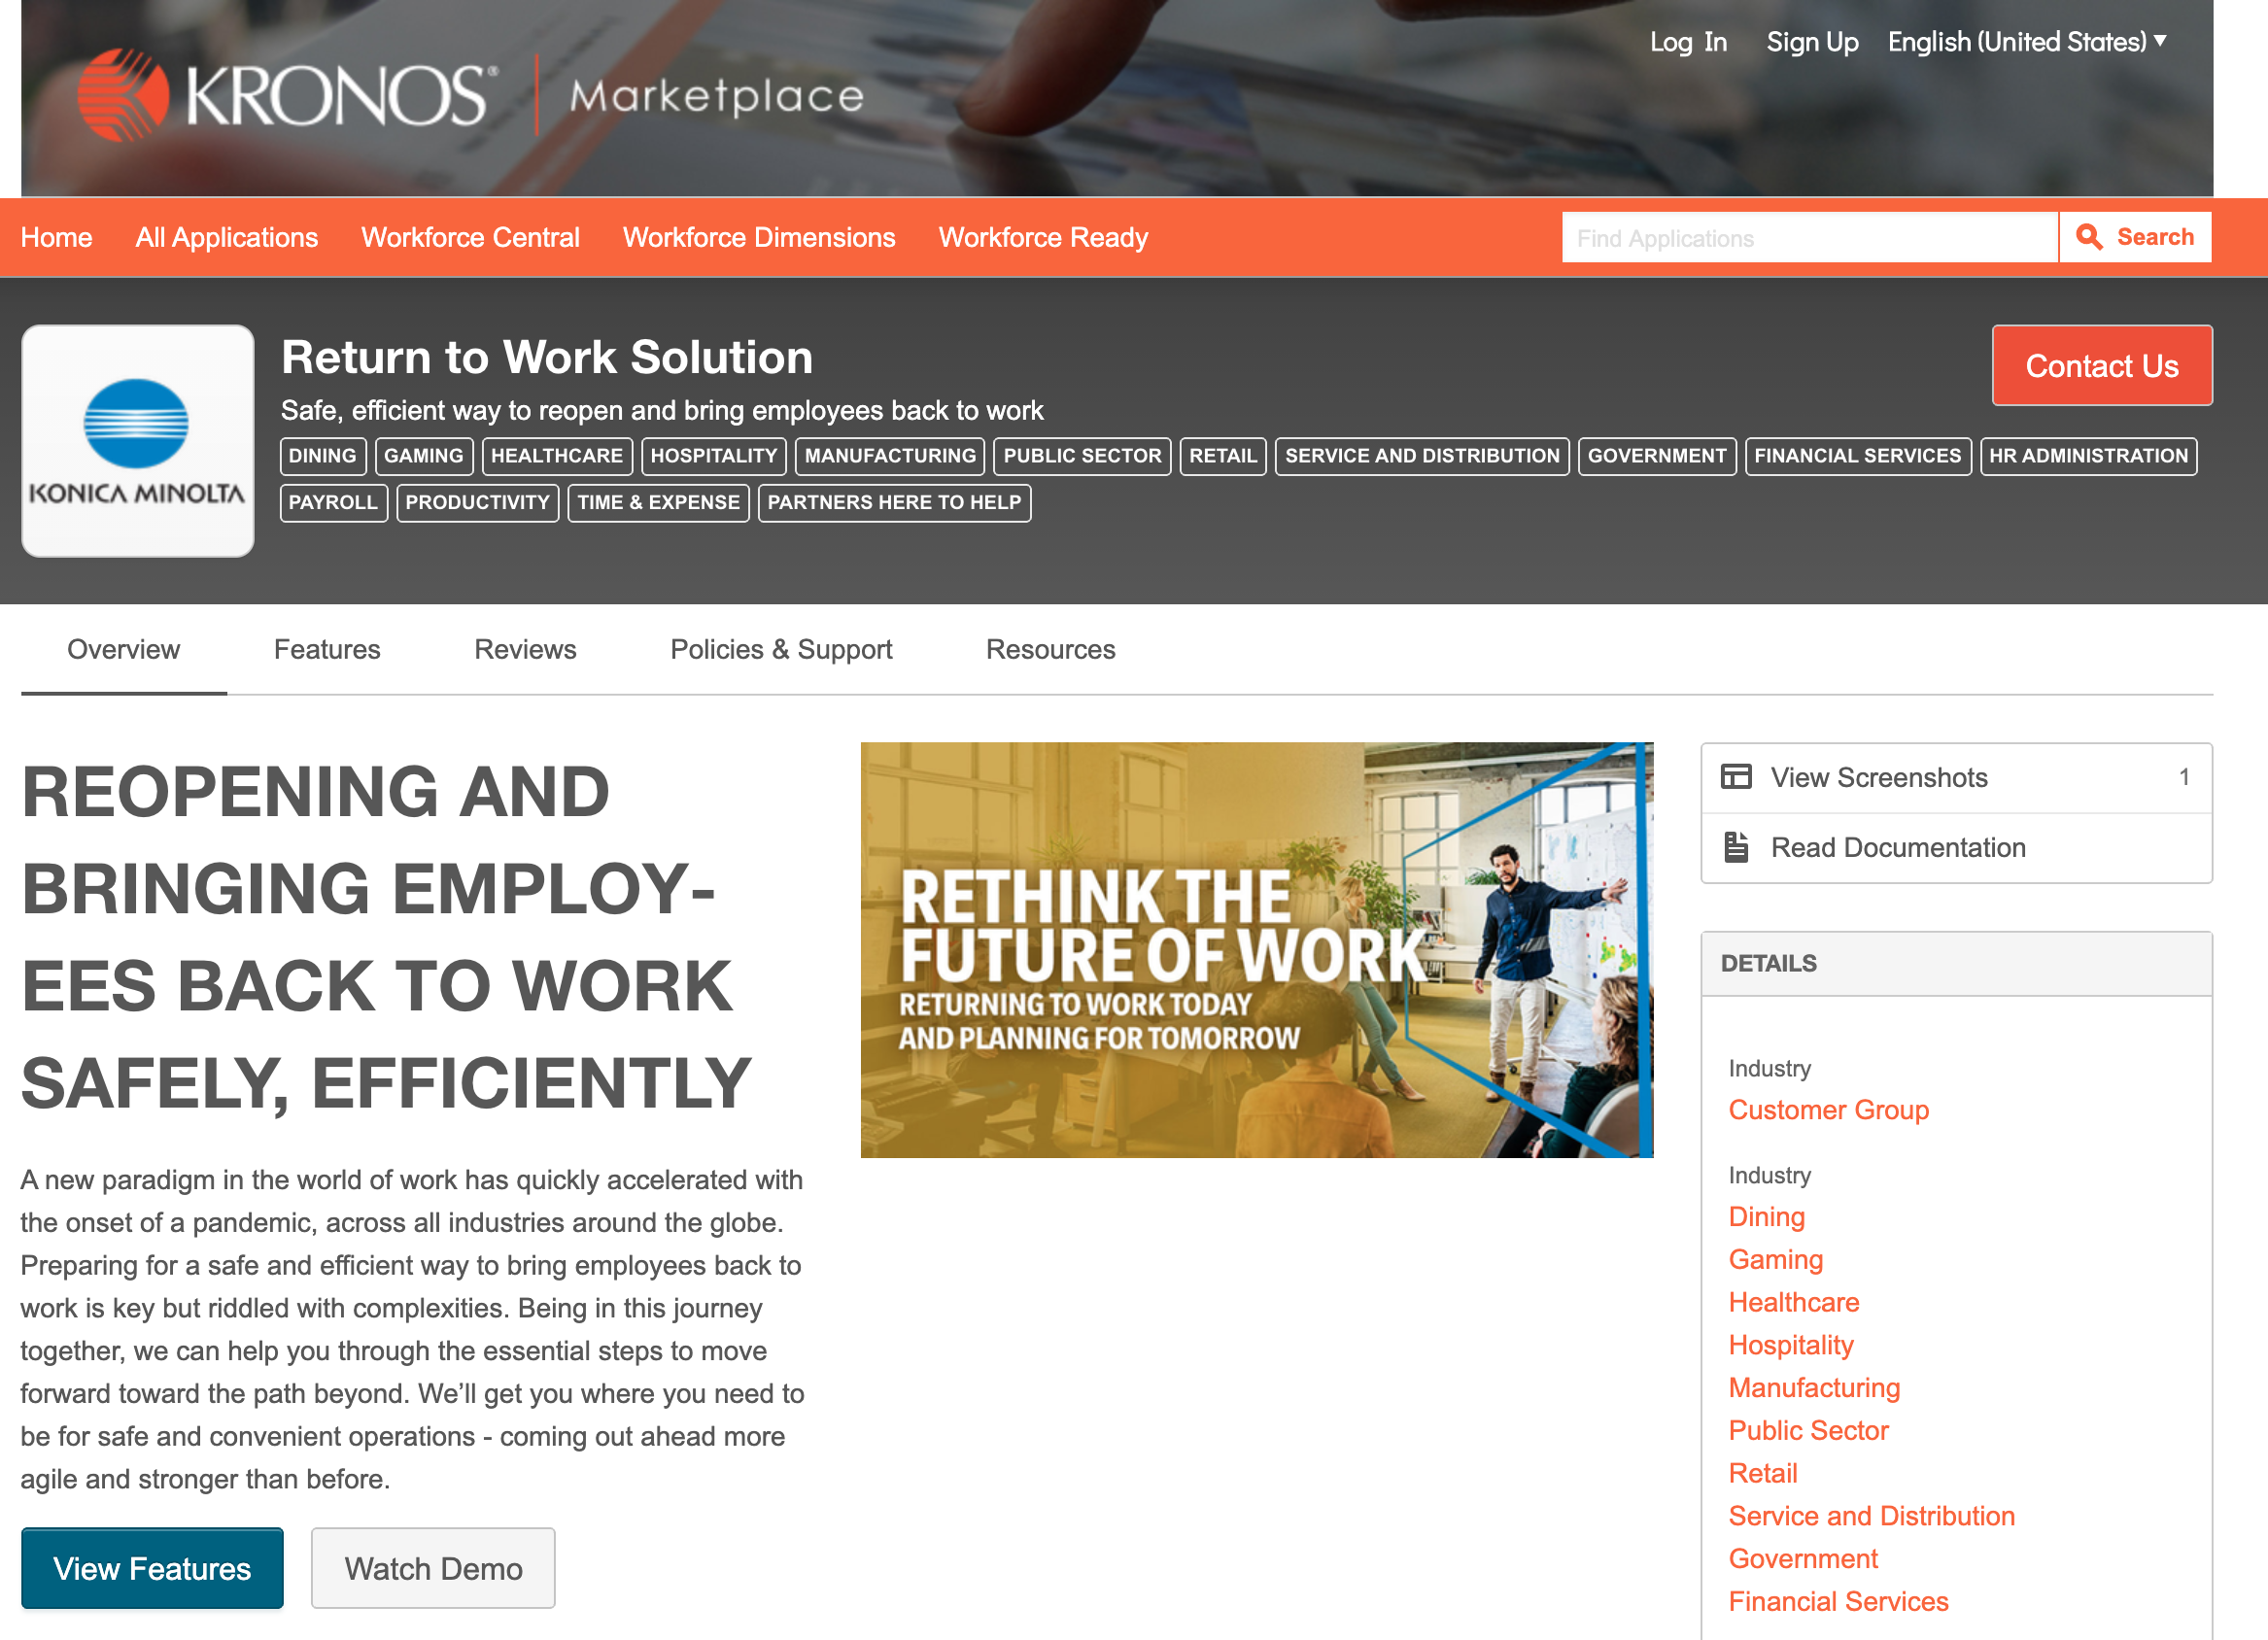 Konica Minolta’s Return to Work solution on the Kronos Marketplace.